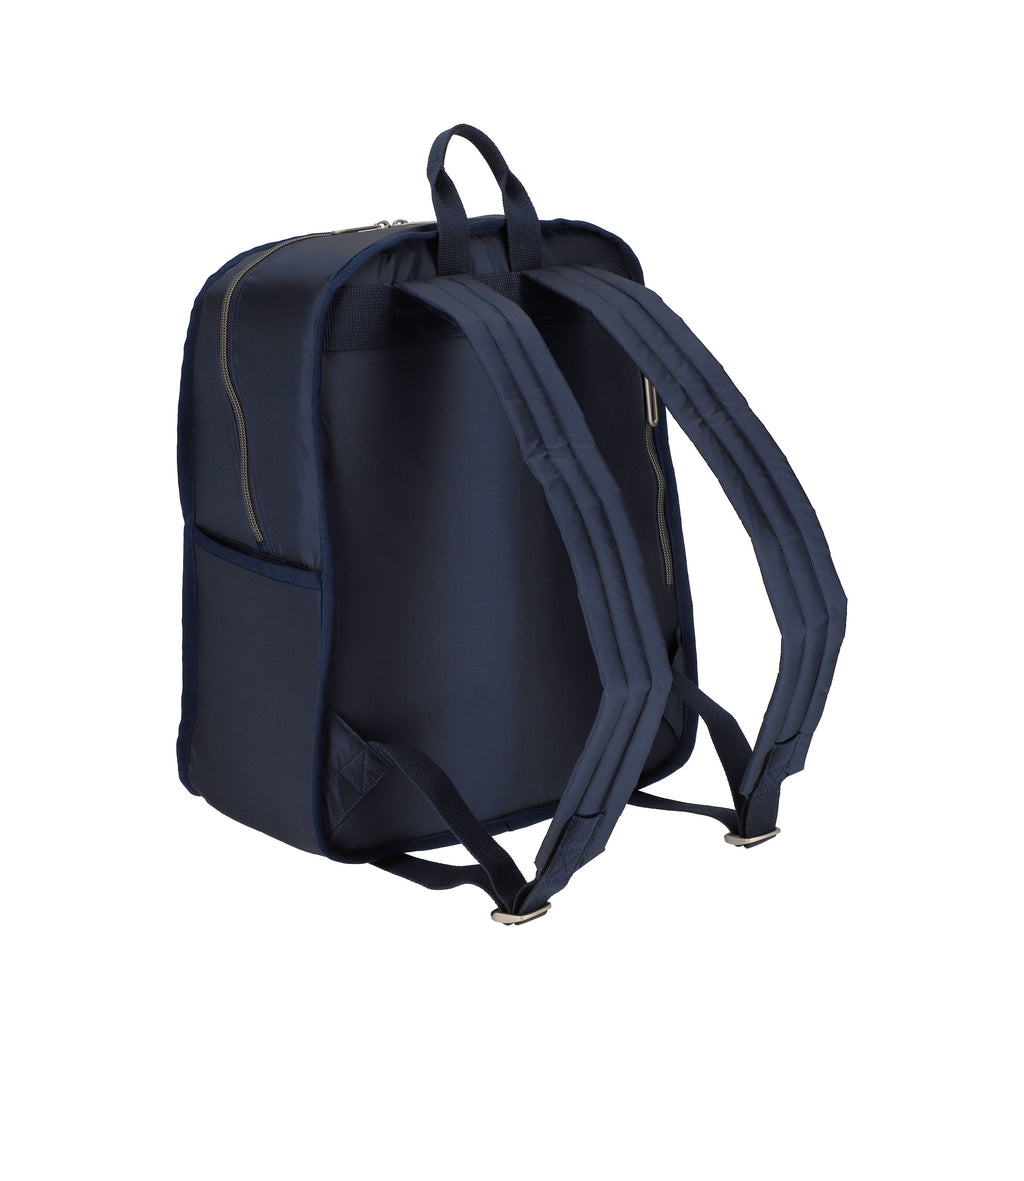 Functional Backpack - 22148453007408